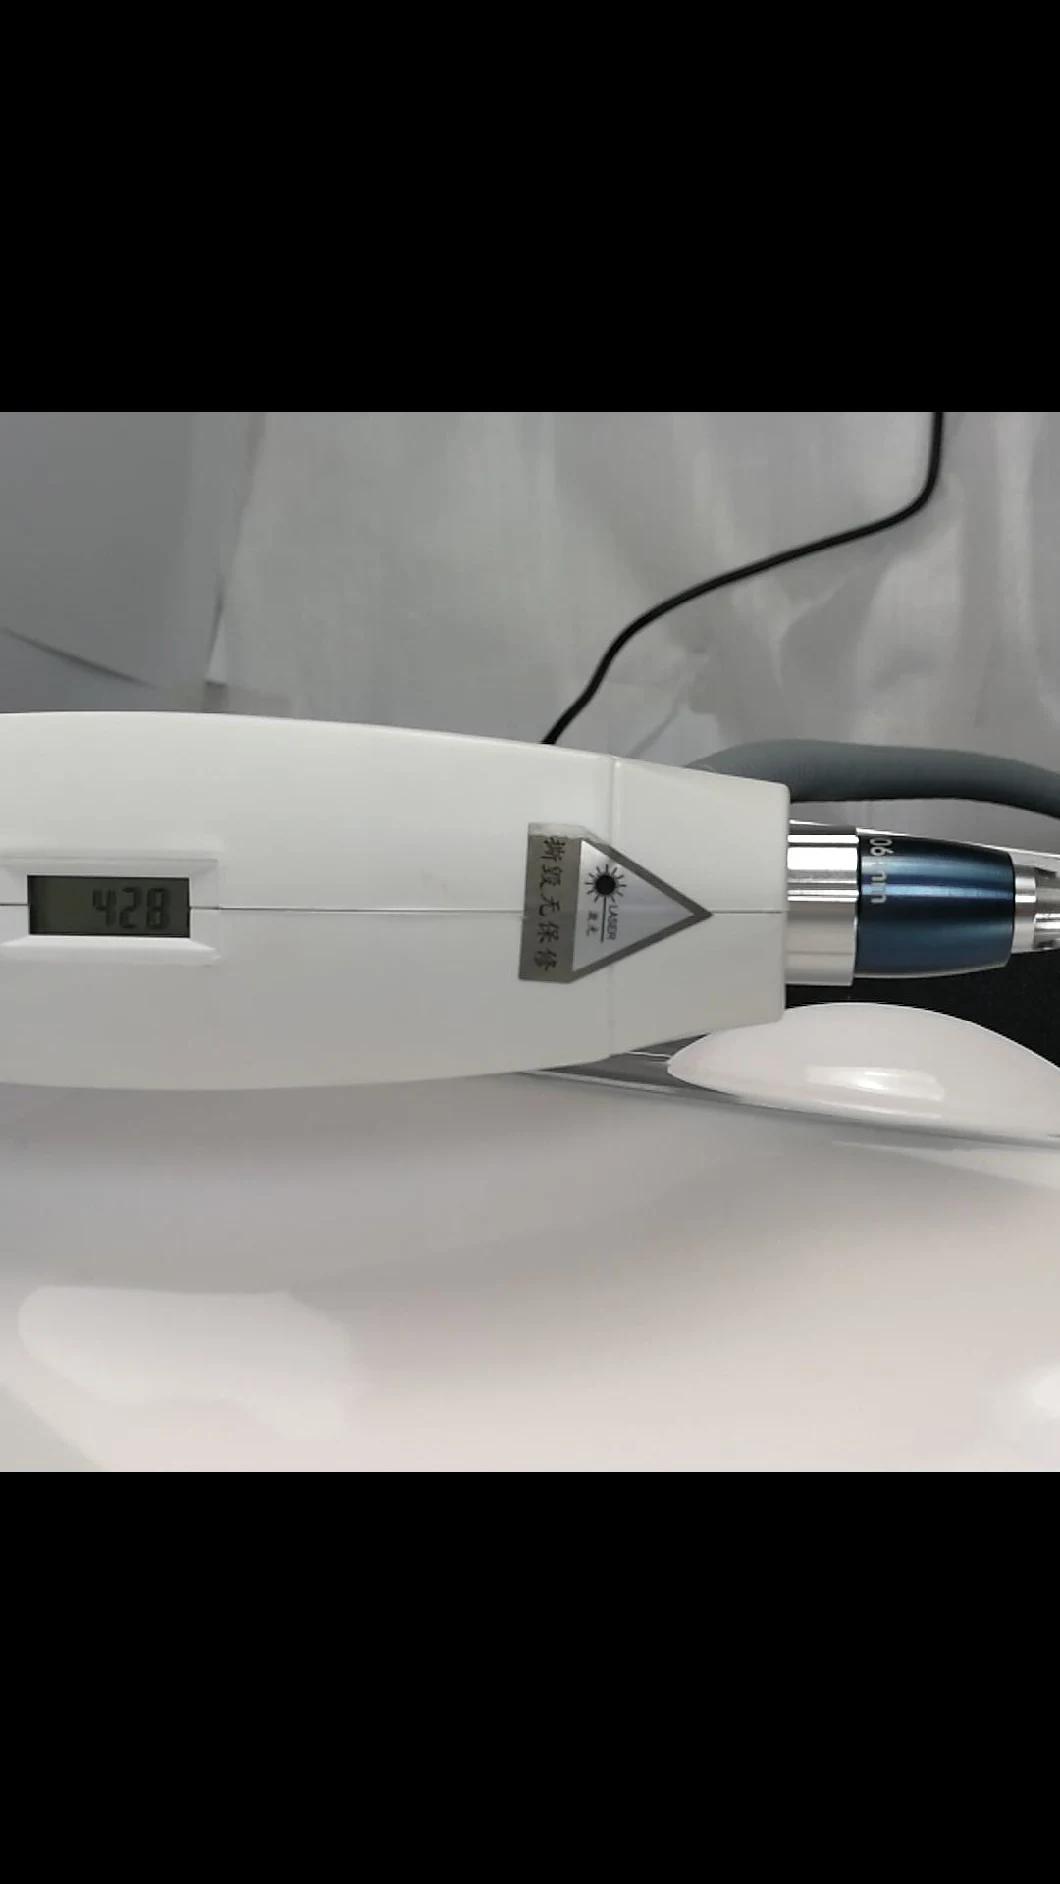 2022 Newest Tattoo Removal Machine ND: YAG Laser Q Switch ND YAG Laser